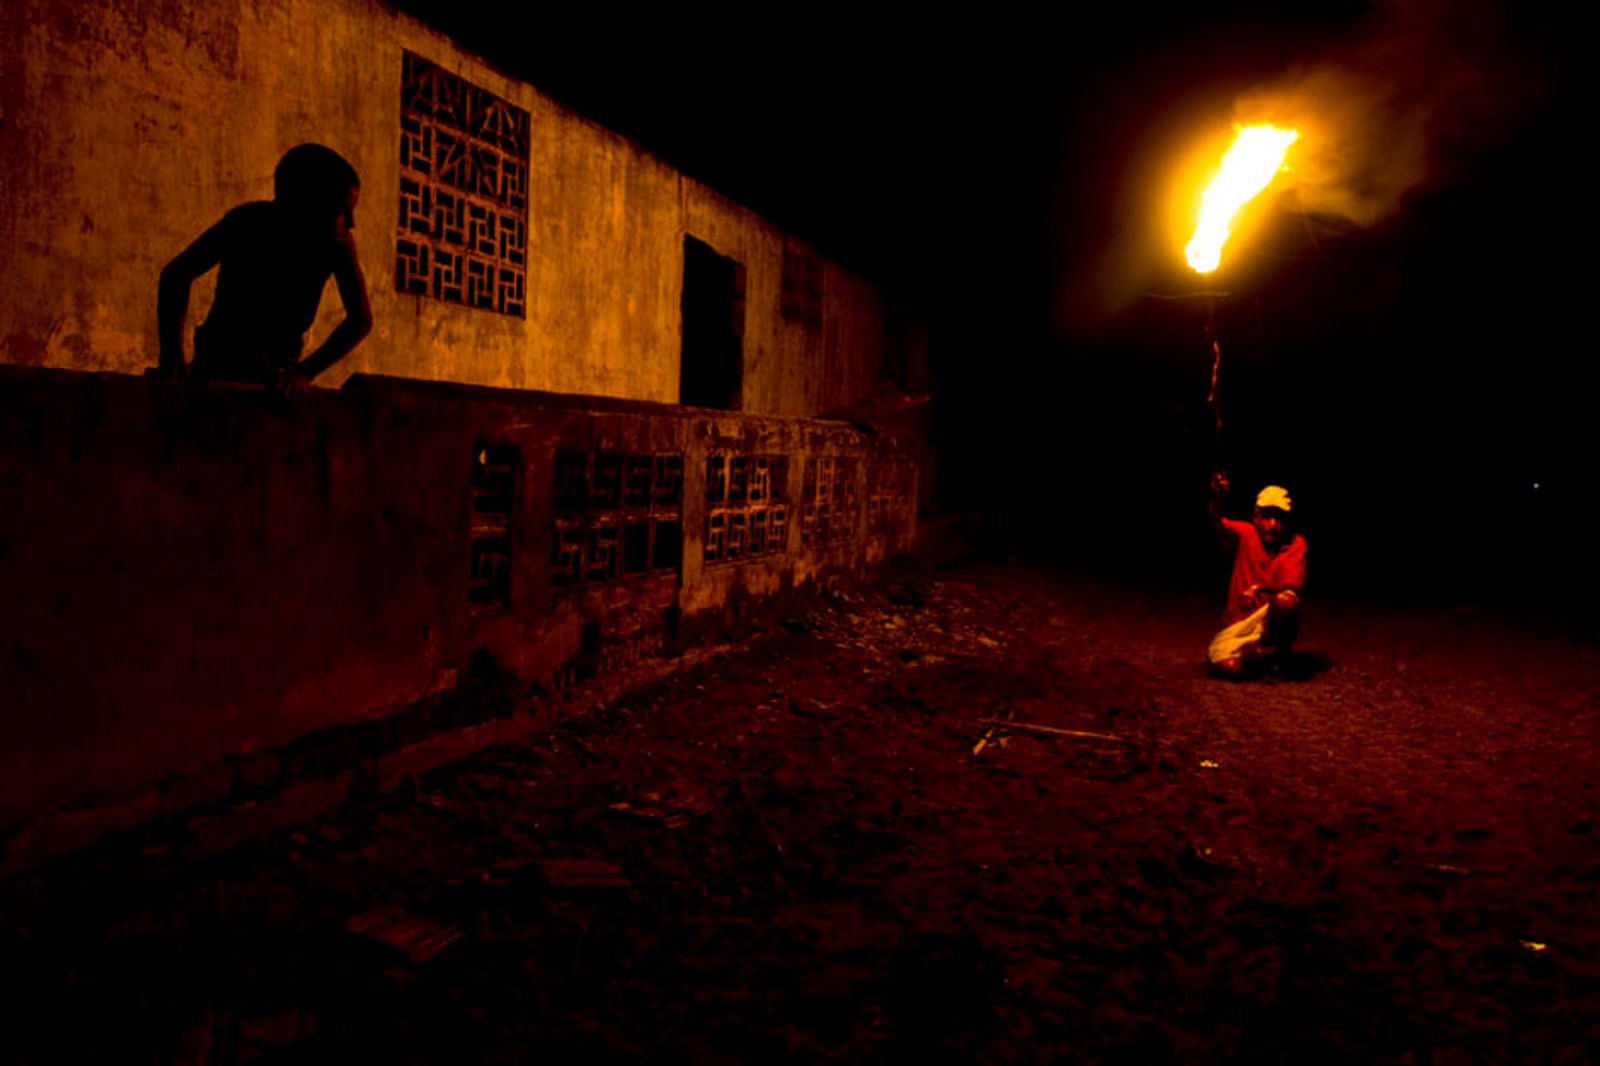 © Santiago Escobar-Jaramillo - Image from the COLOMBIA, tierra de luz (Land of Light) photography project